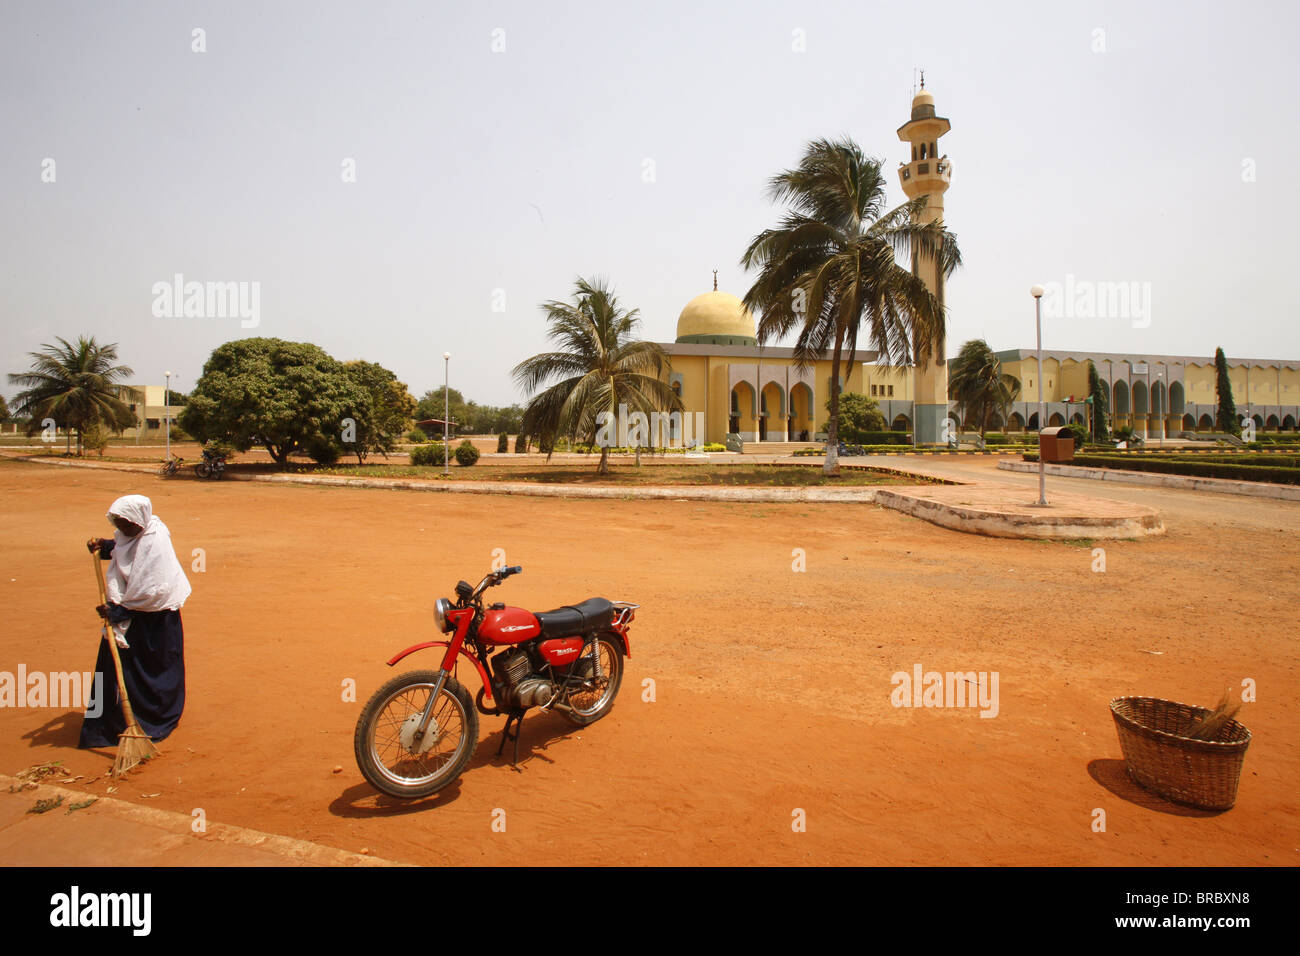 Lomé centro culturale islamico, Akepe, Togo, Africa occidentale Foto Stock